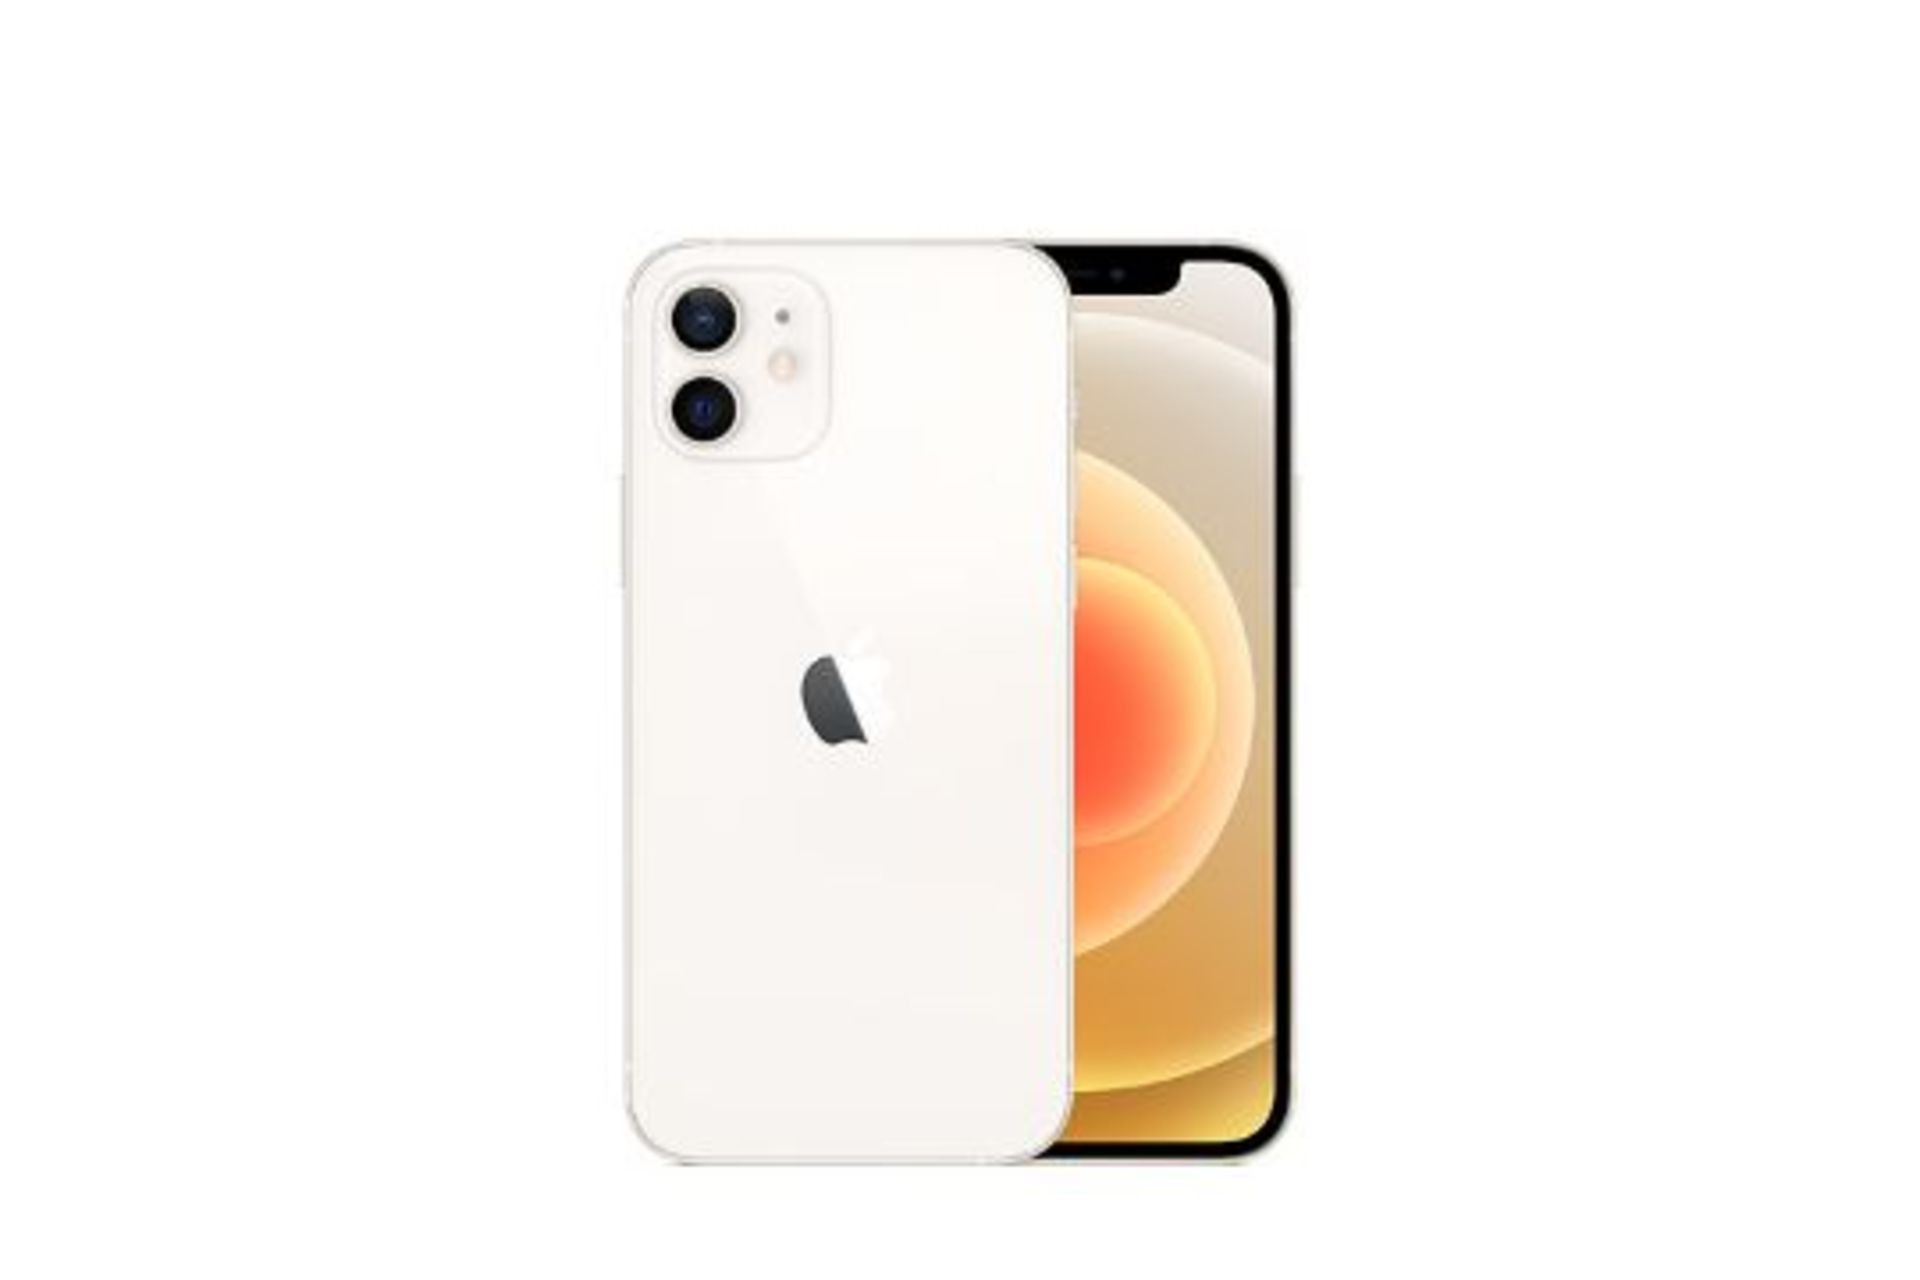 RRP - £679.00 Apple iPhone 12 64GB - White